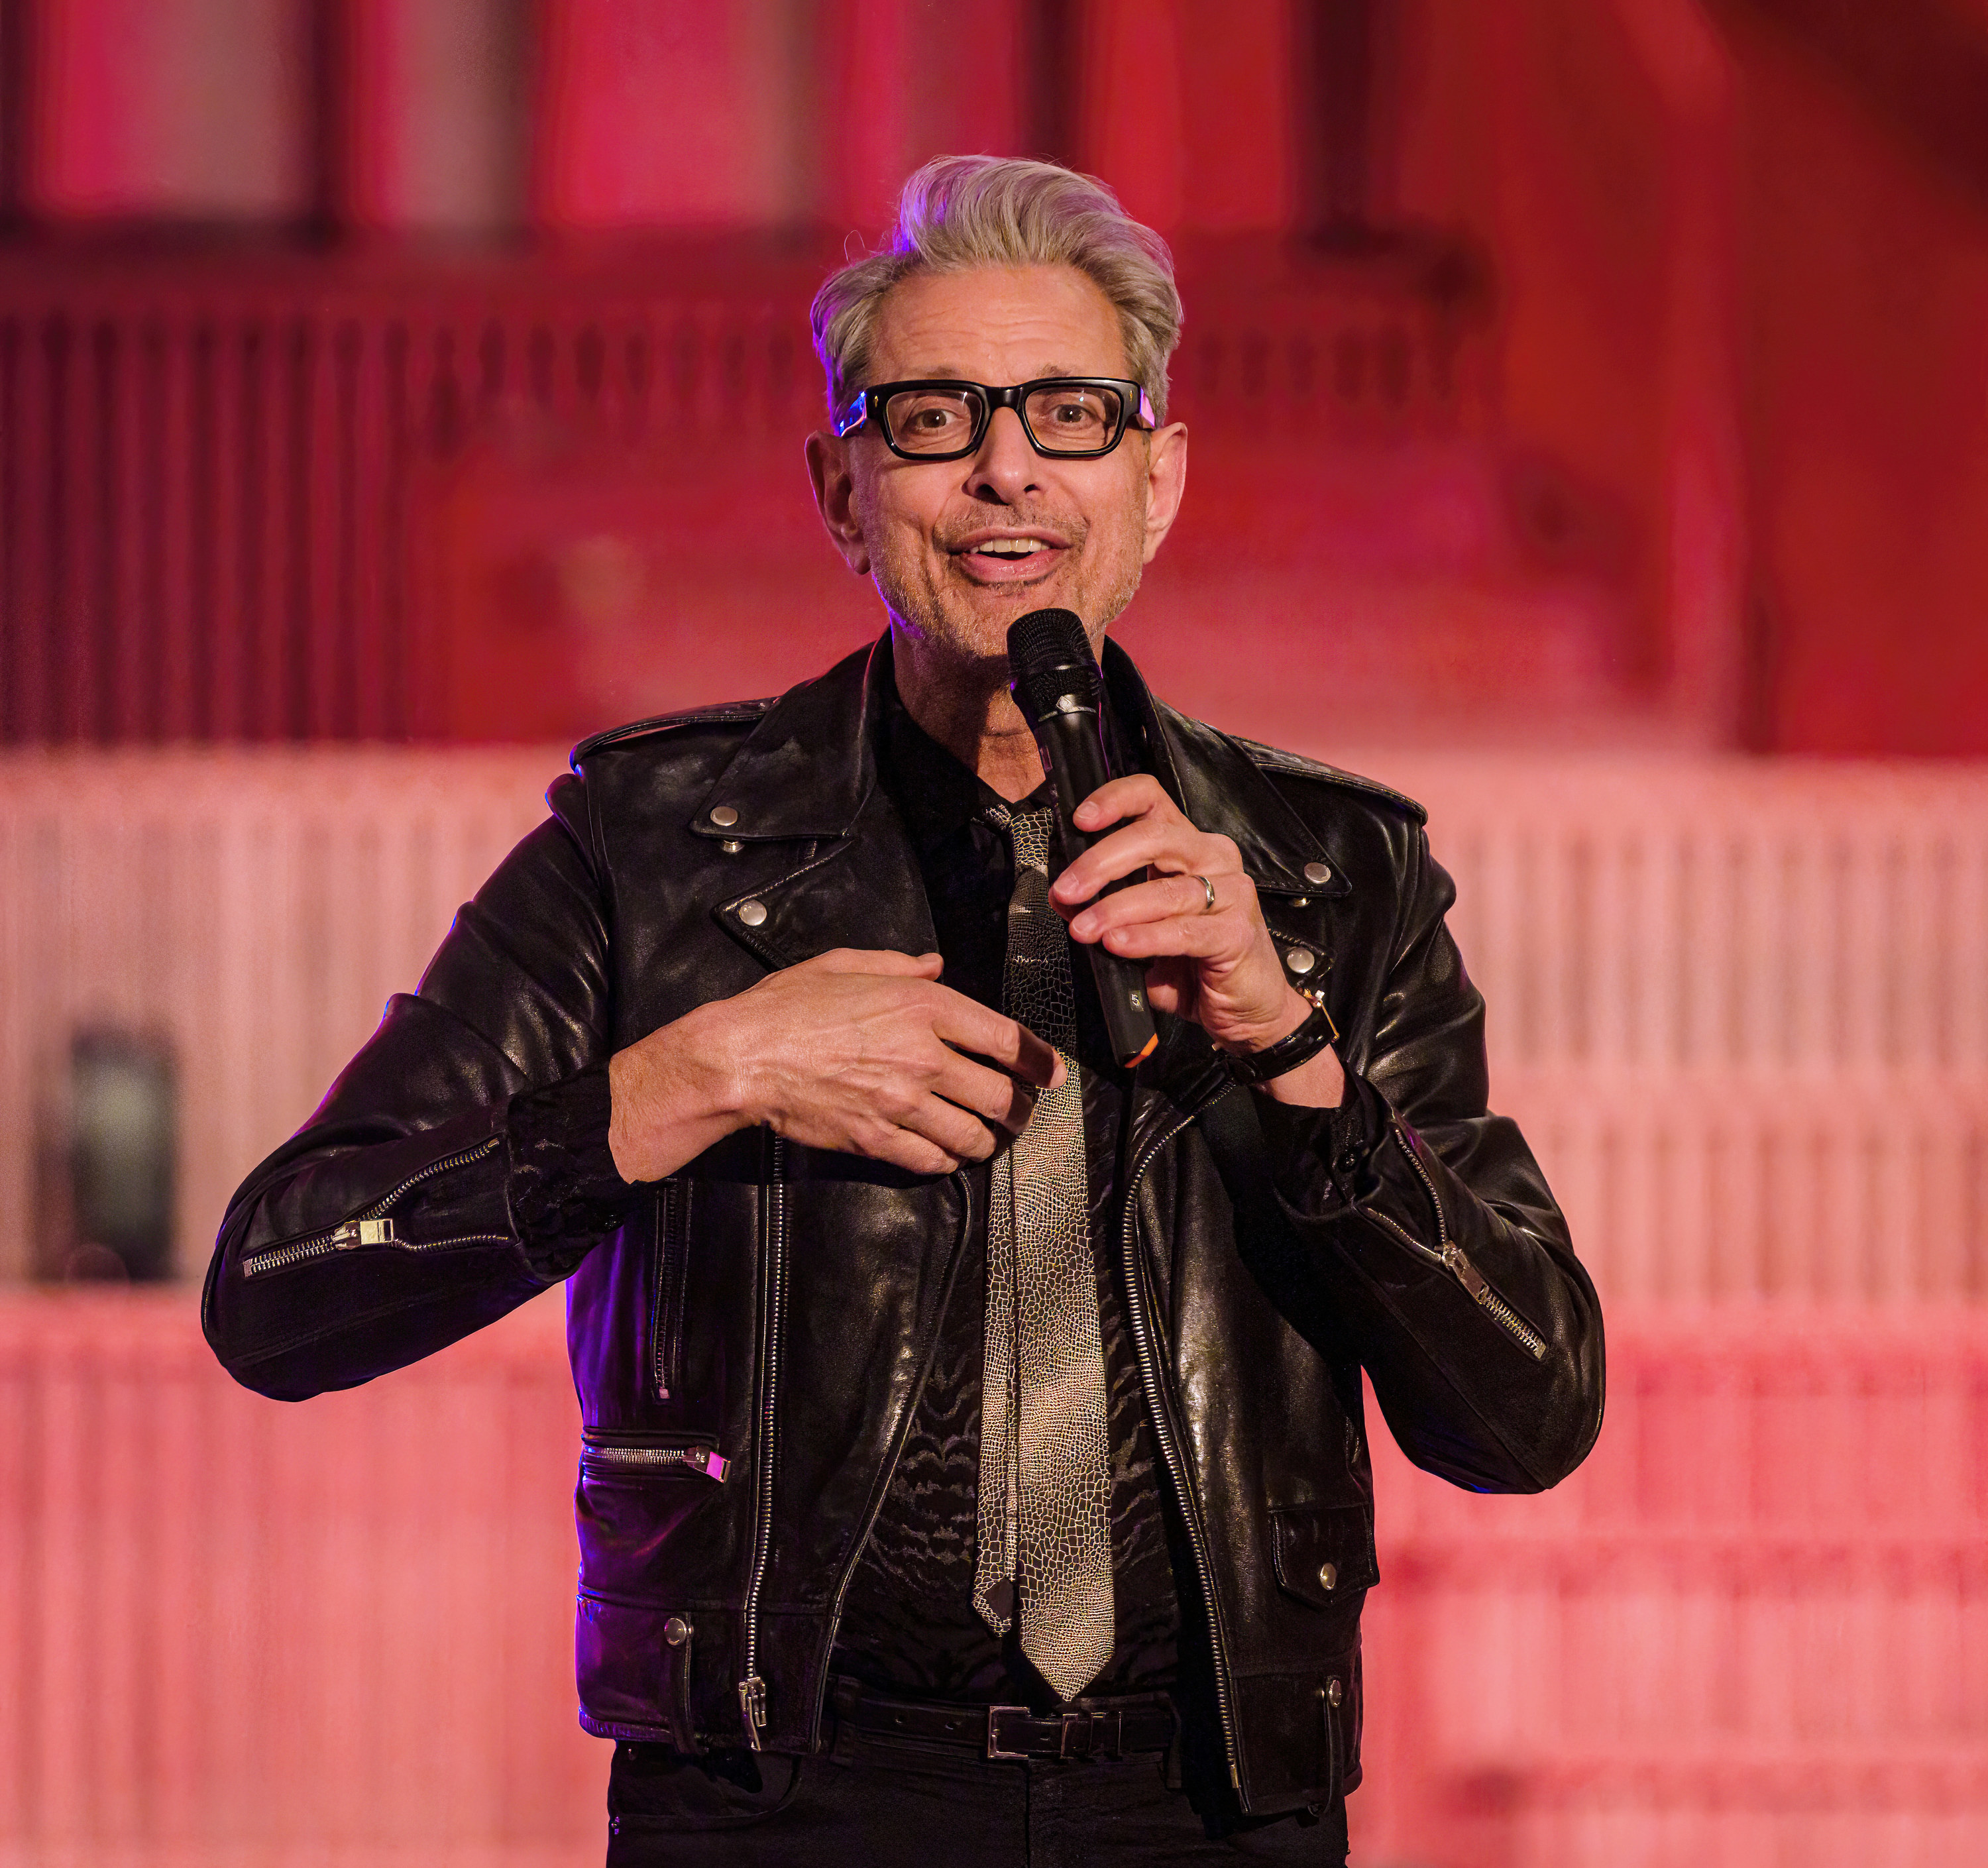 jeff goldblum on stage, holding a microphone